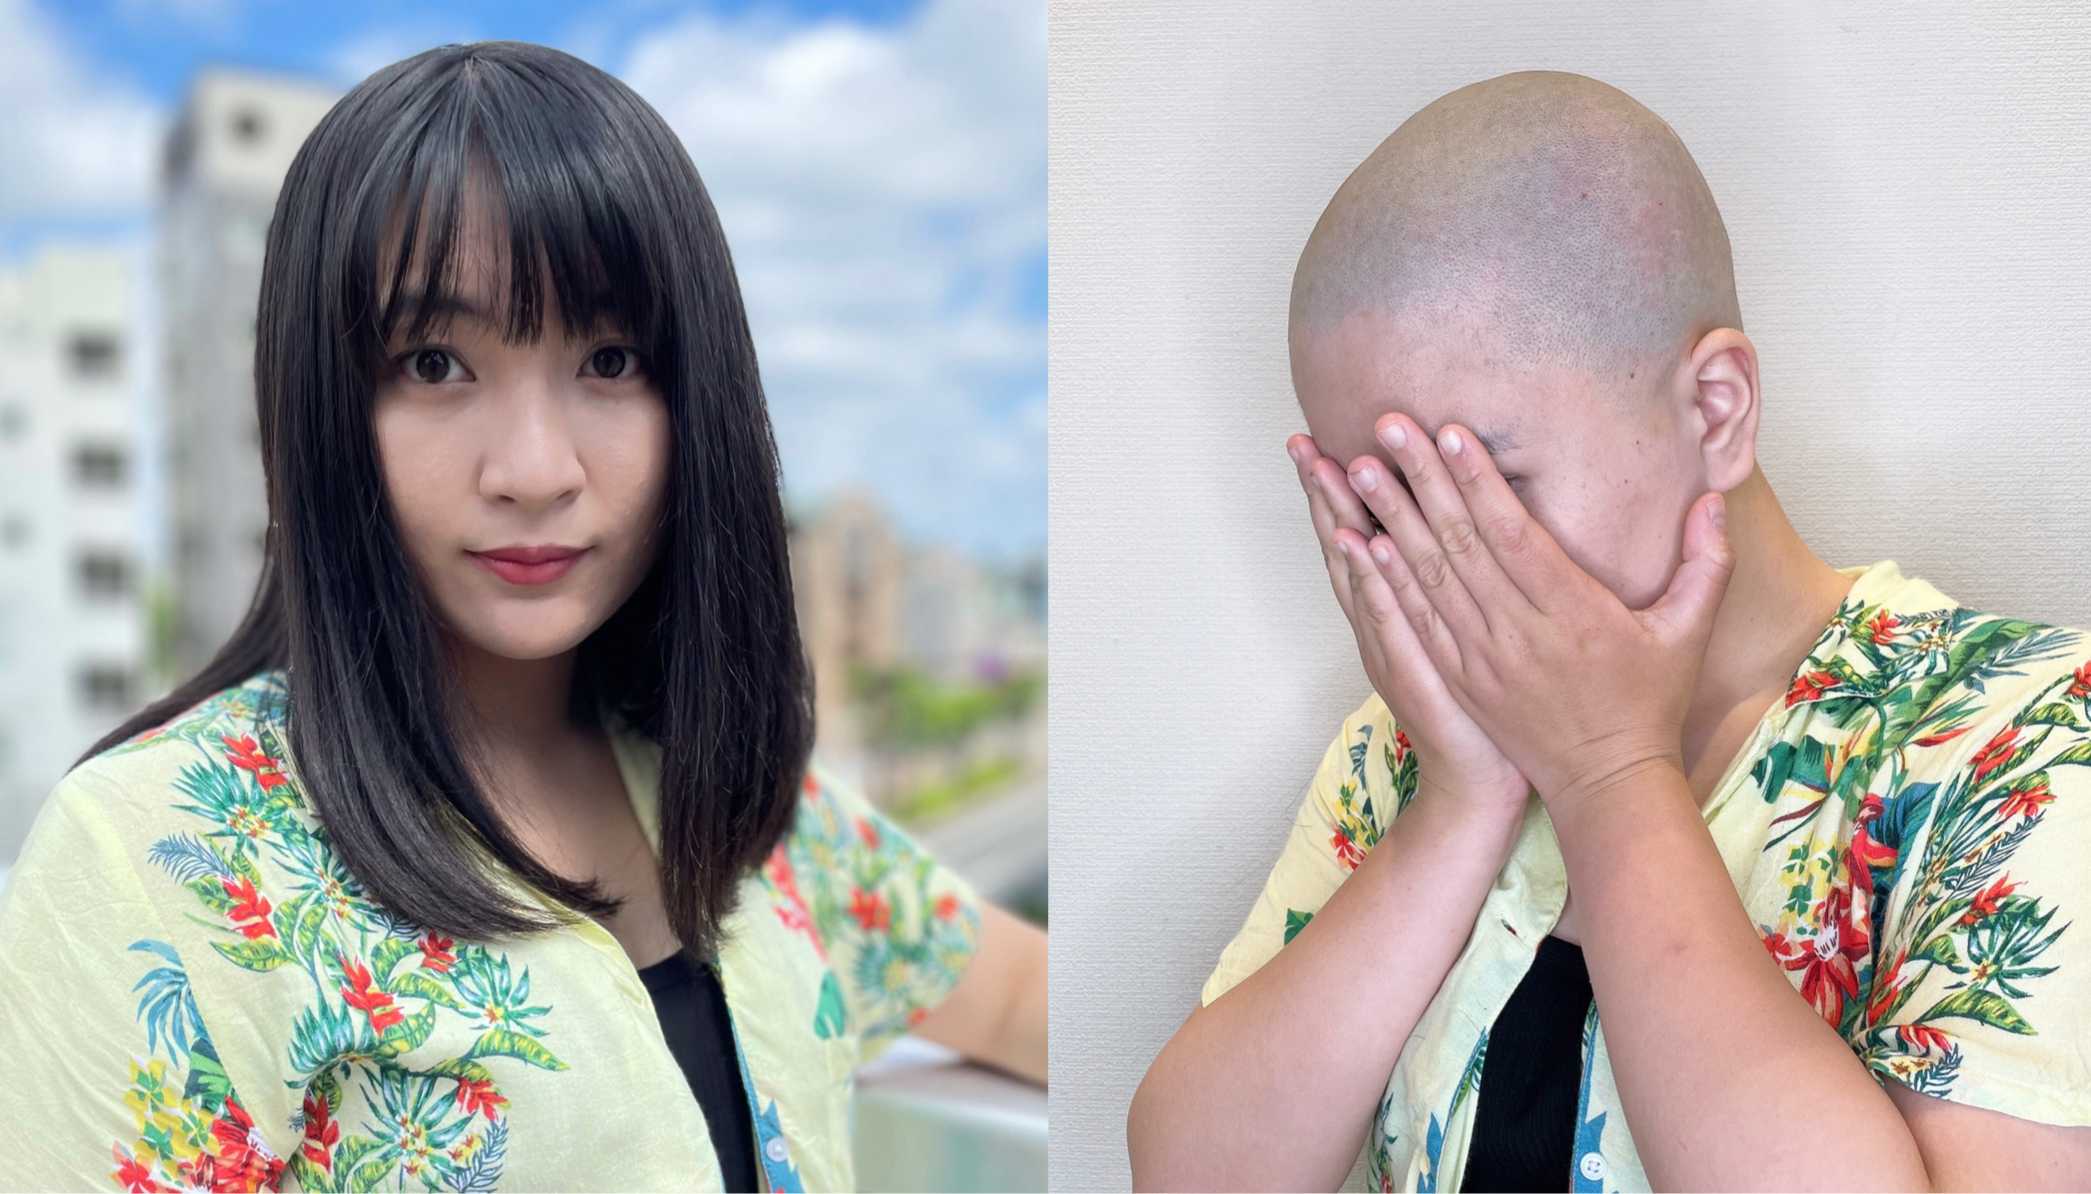 J158 女子大生サラサラ黒髪をスキンヘッドに Japanese Beauty Long To Bald 断髪美人 Long To Short Haircut